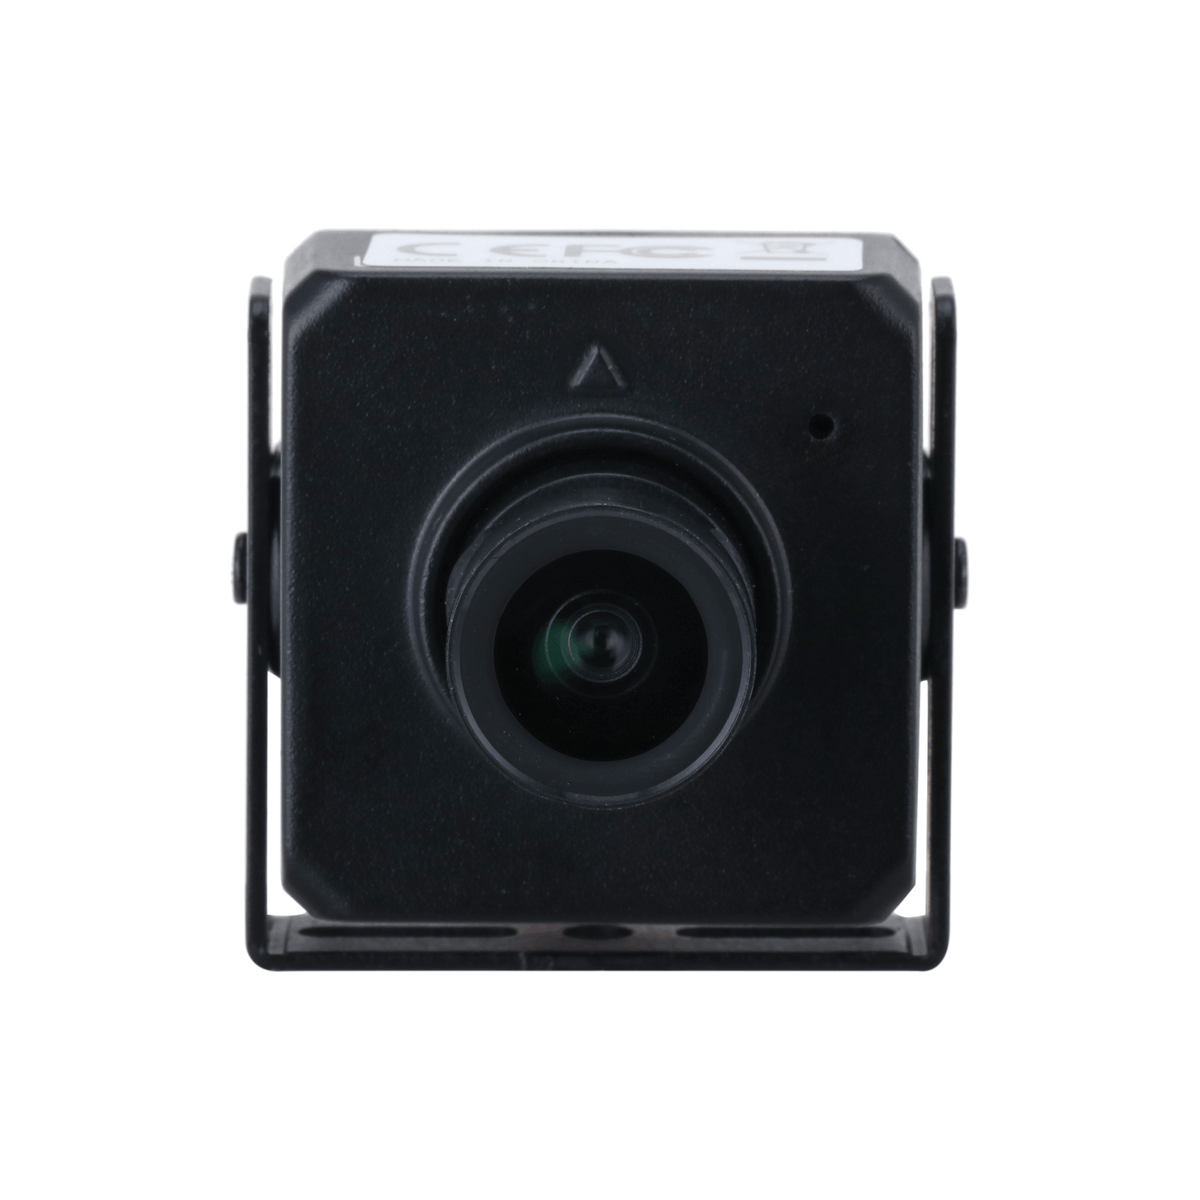 DAHUA IPC-HUM4231S-L5 2MP Fixed-focal Pinhole Network Camera